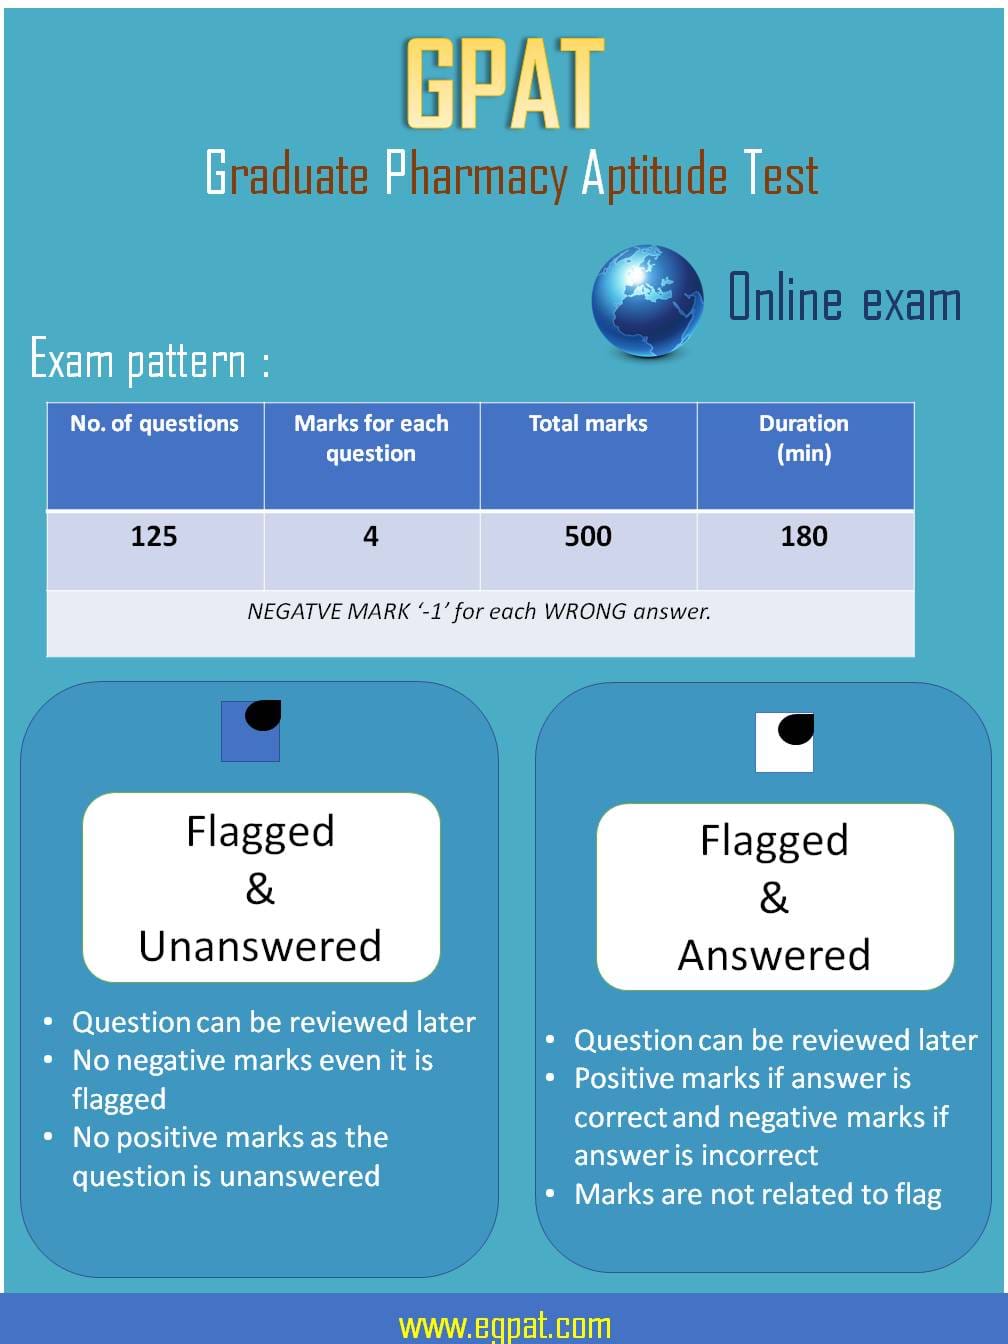 GPAT examination pattern